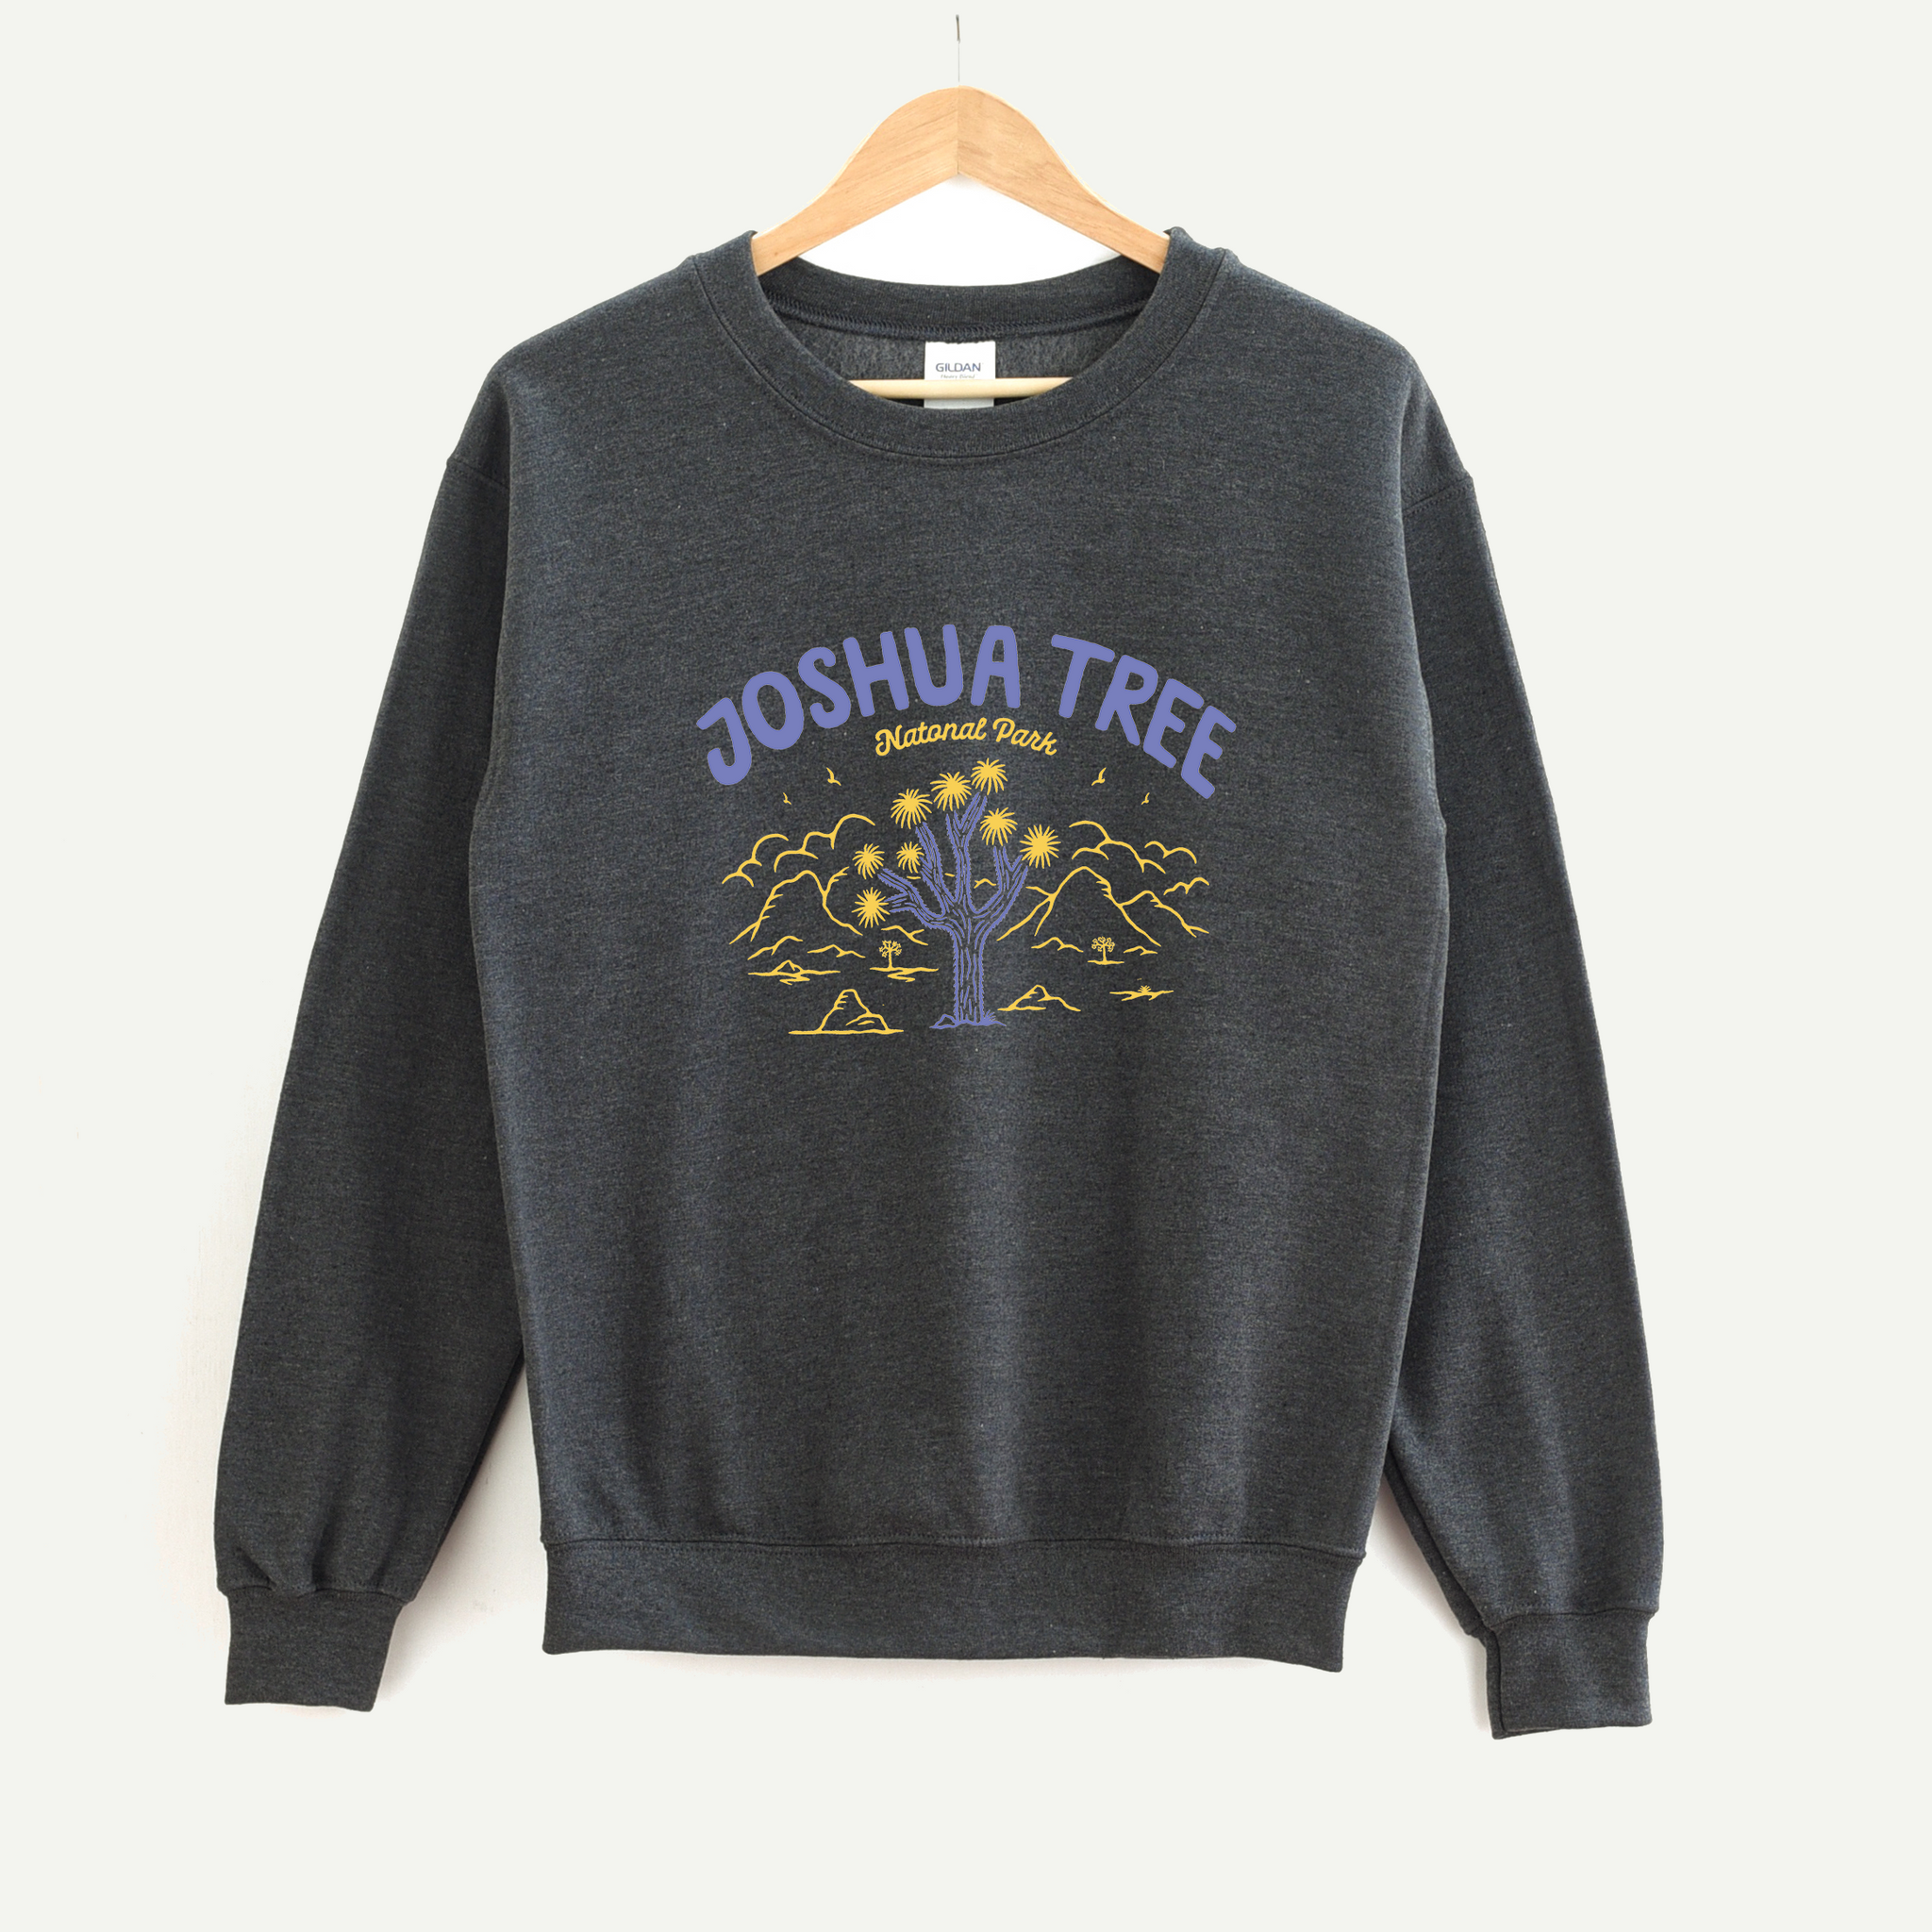 Joshua Tree Retro Style Crewneck Sweatshirt